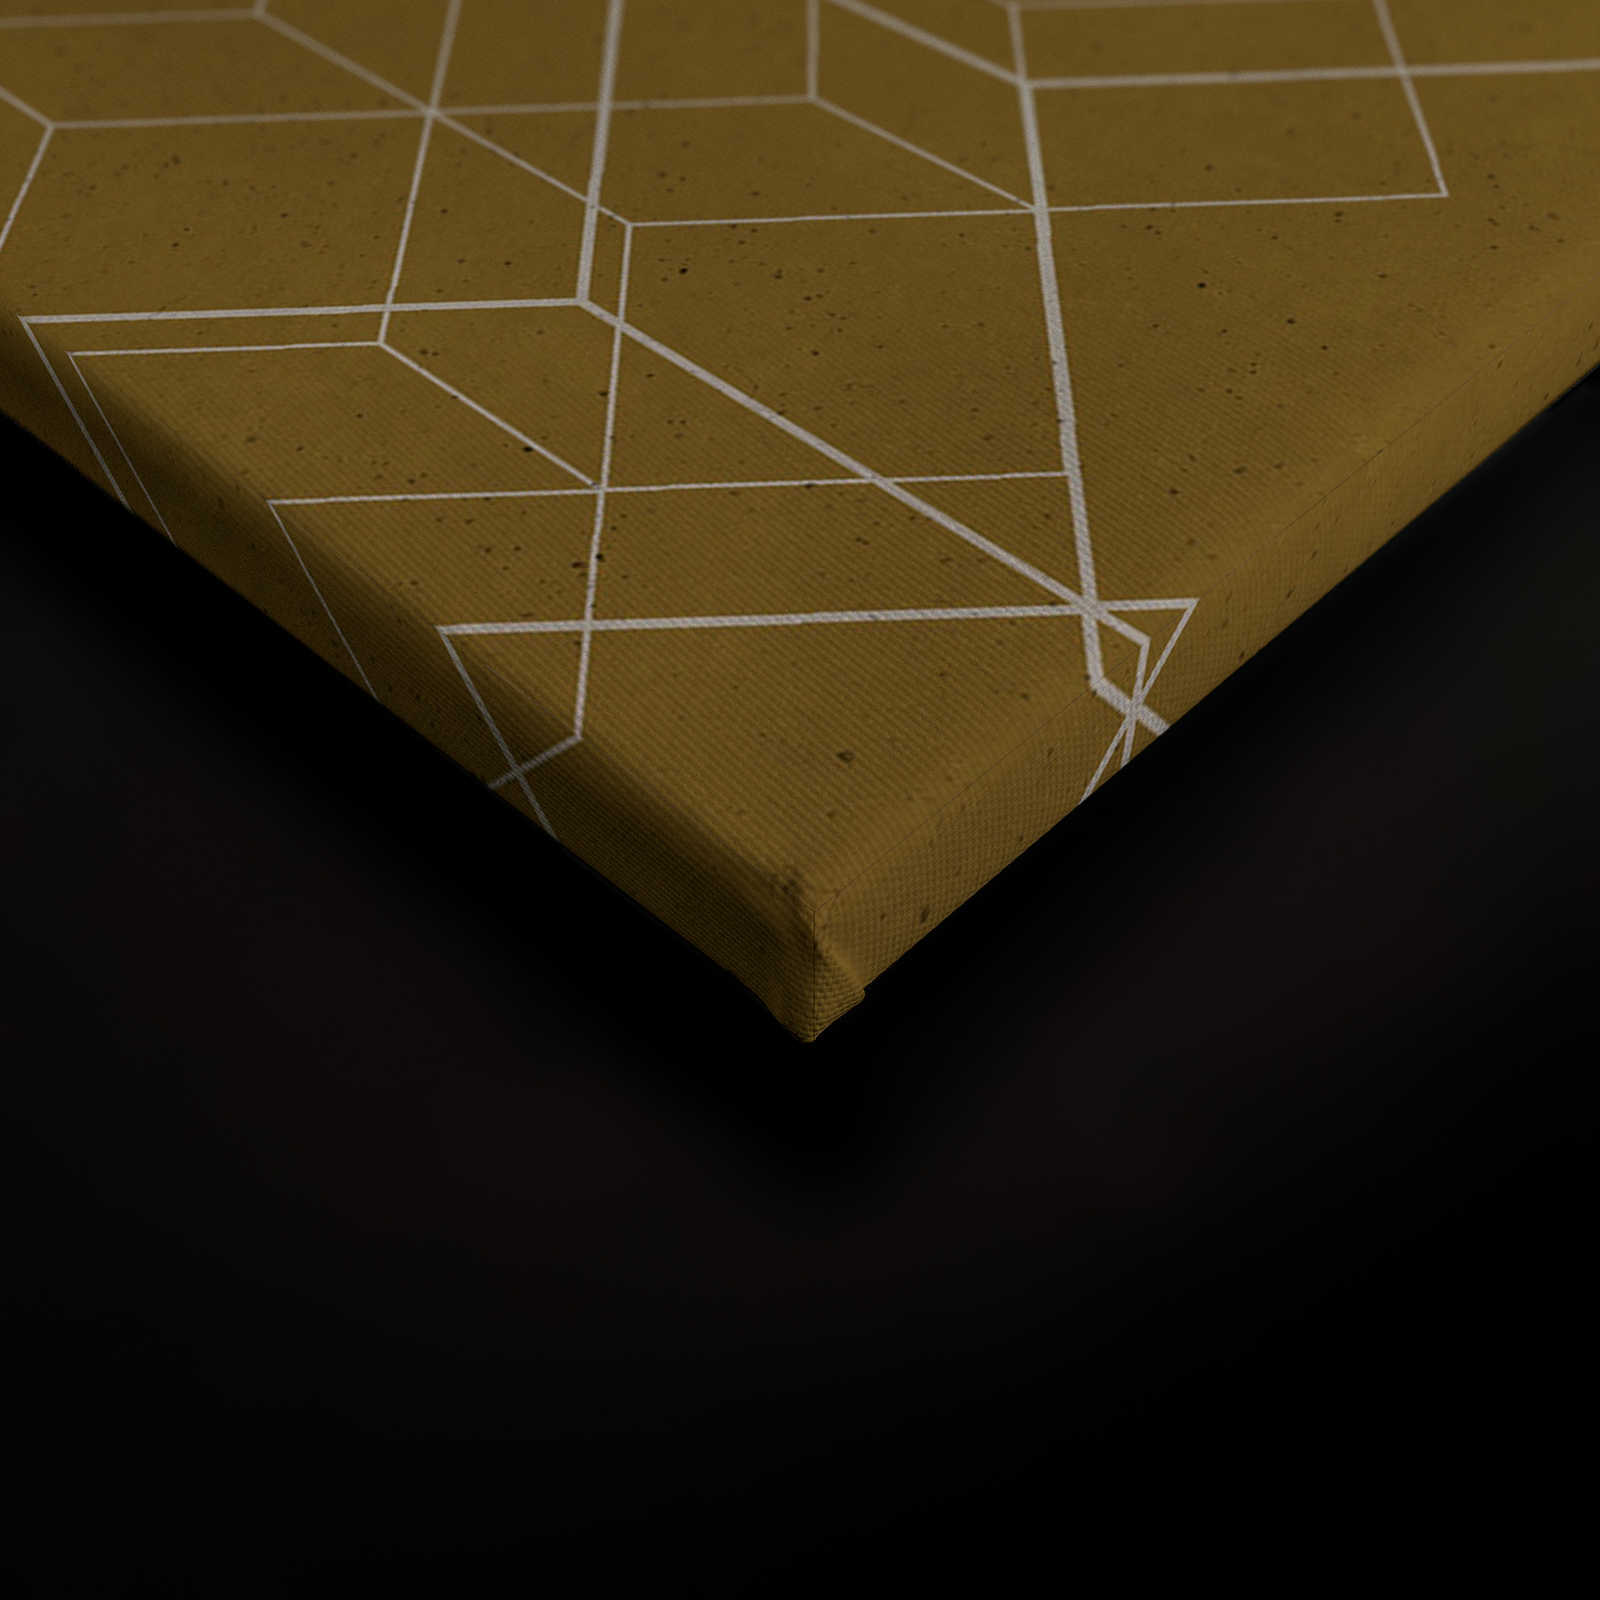             Cuadro lienzo motivo geométrico - 0,90 m x 0,60 m
        